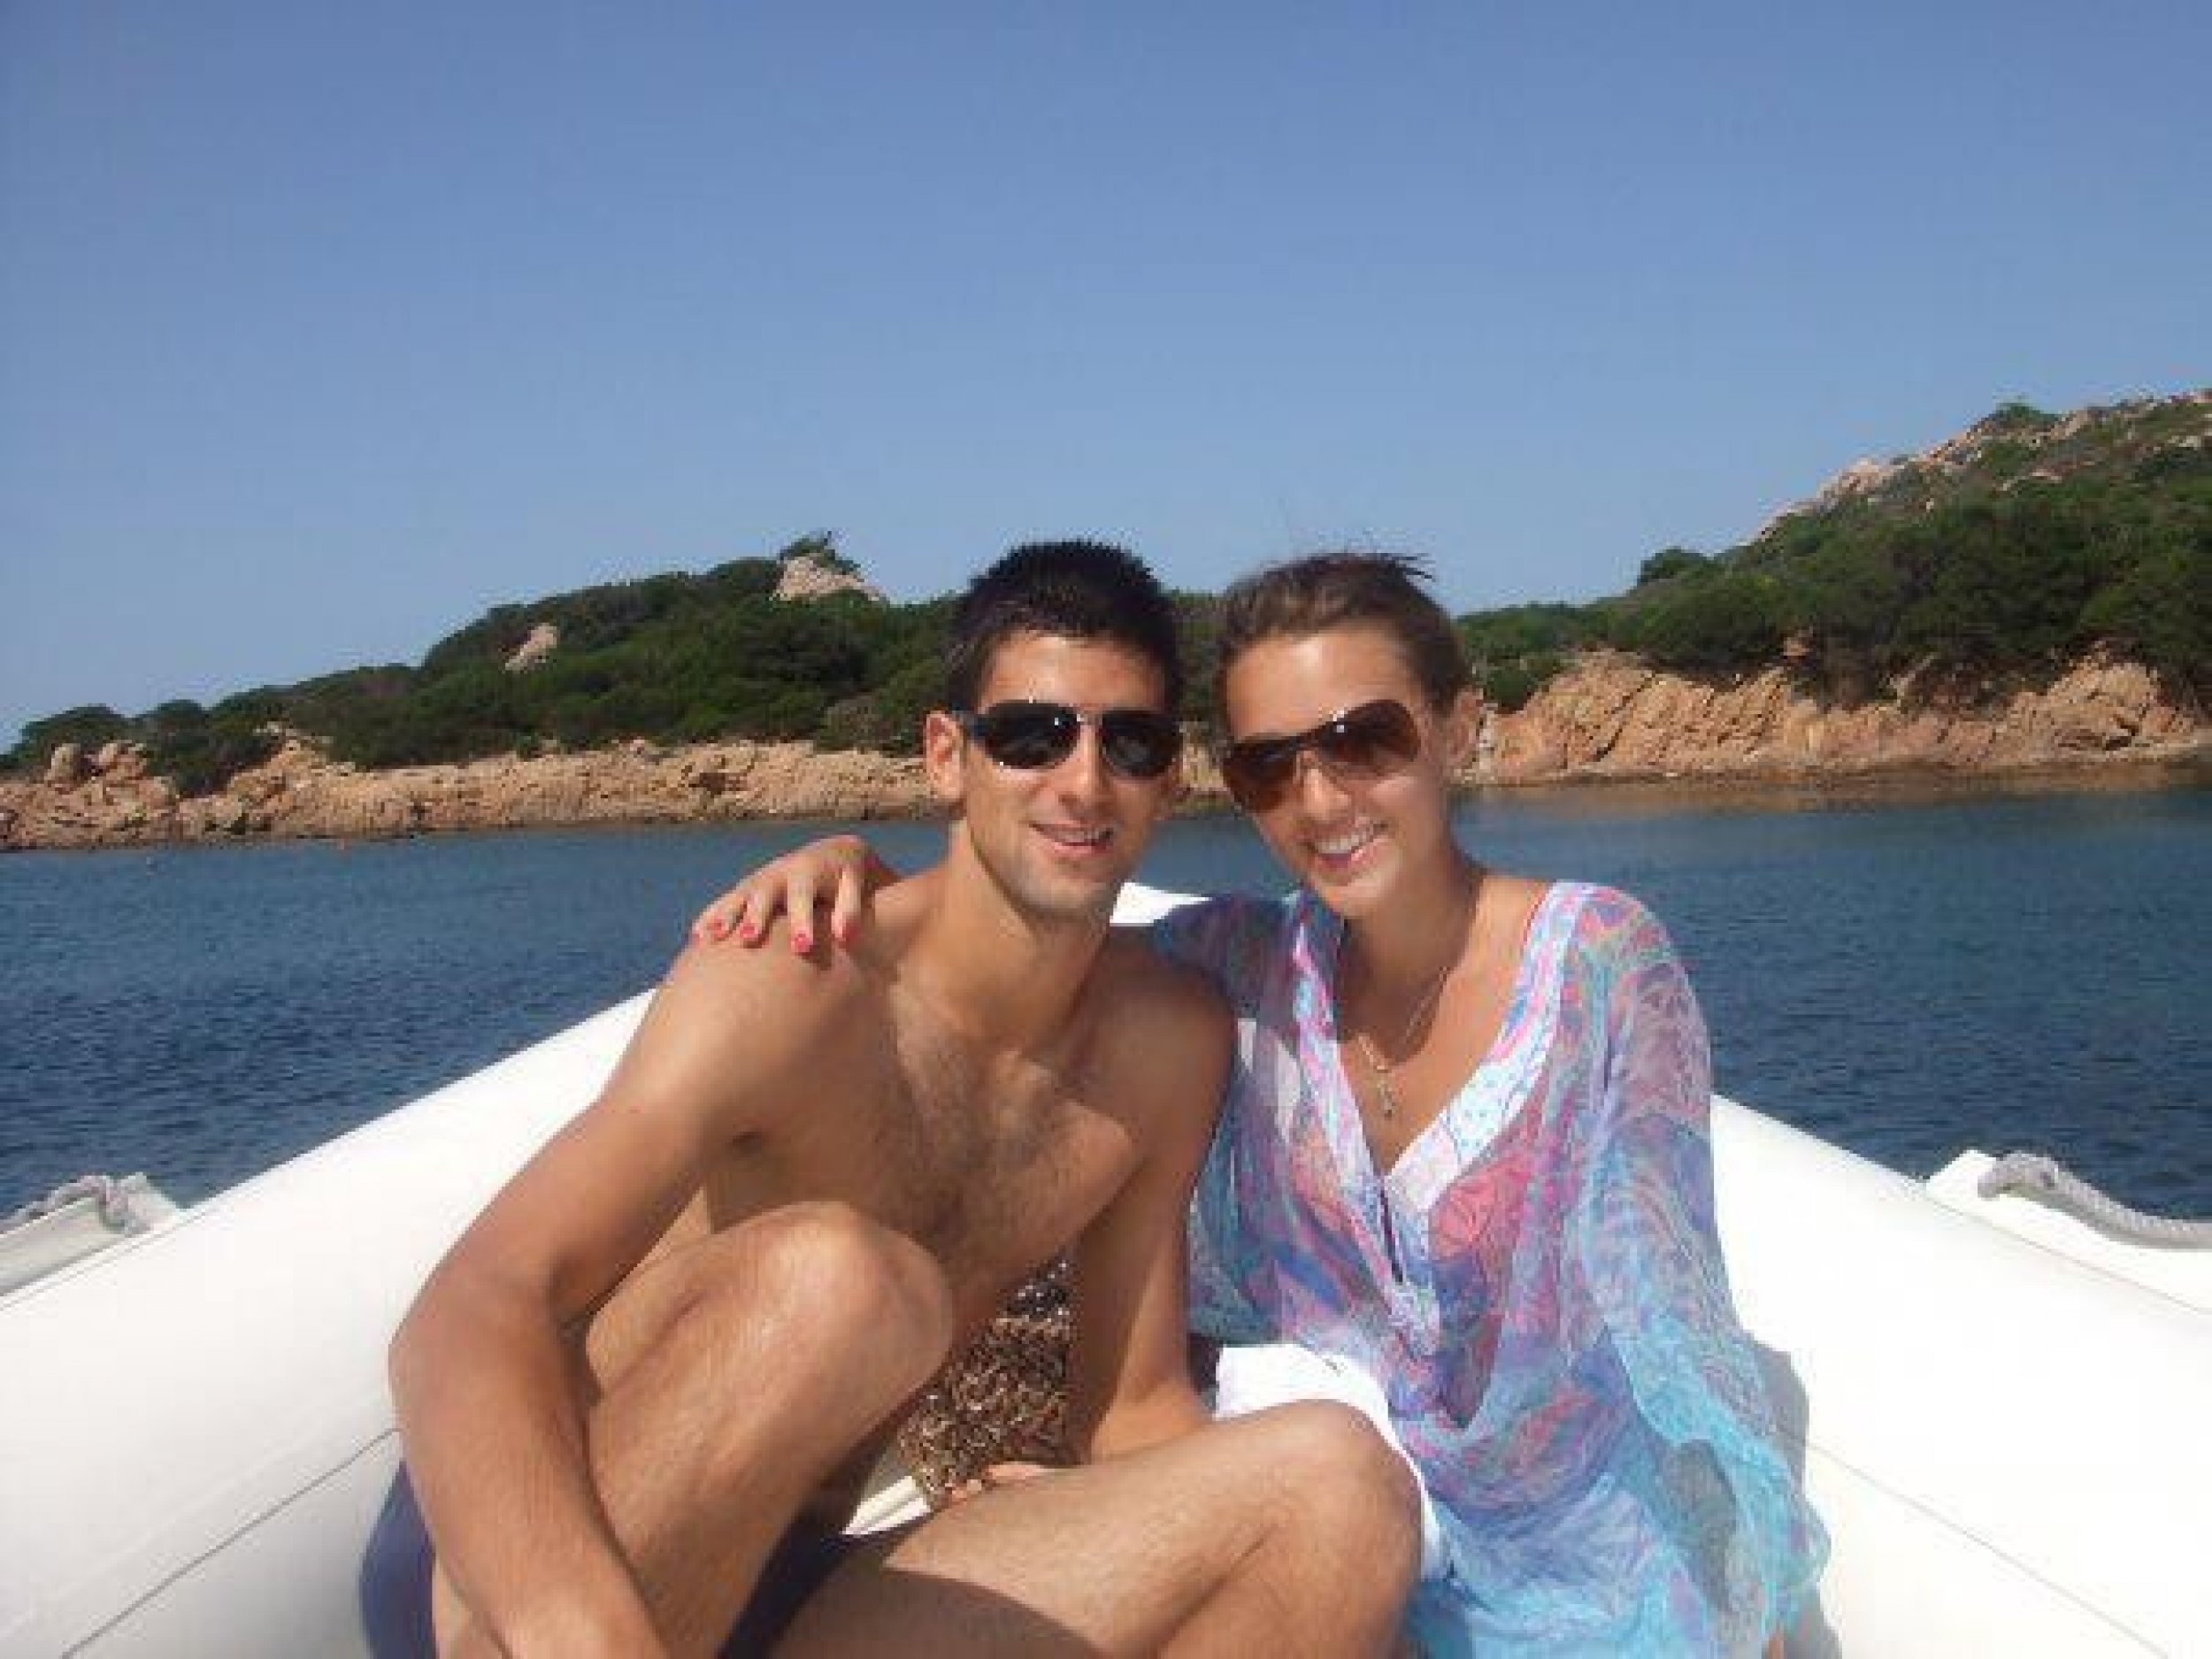 Tennis star Novak Djokovic with girlfriend Jelena Ristic